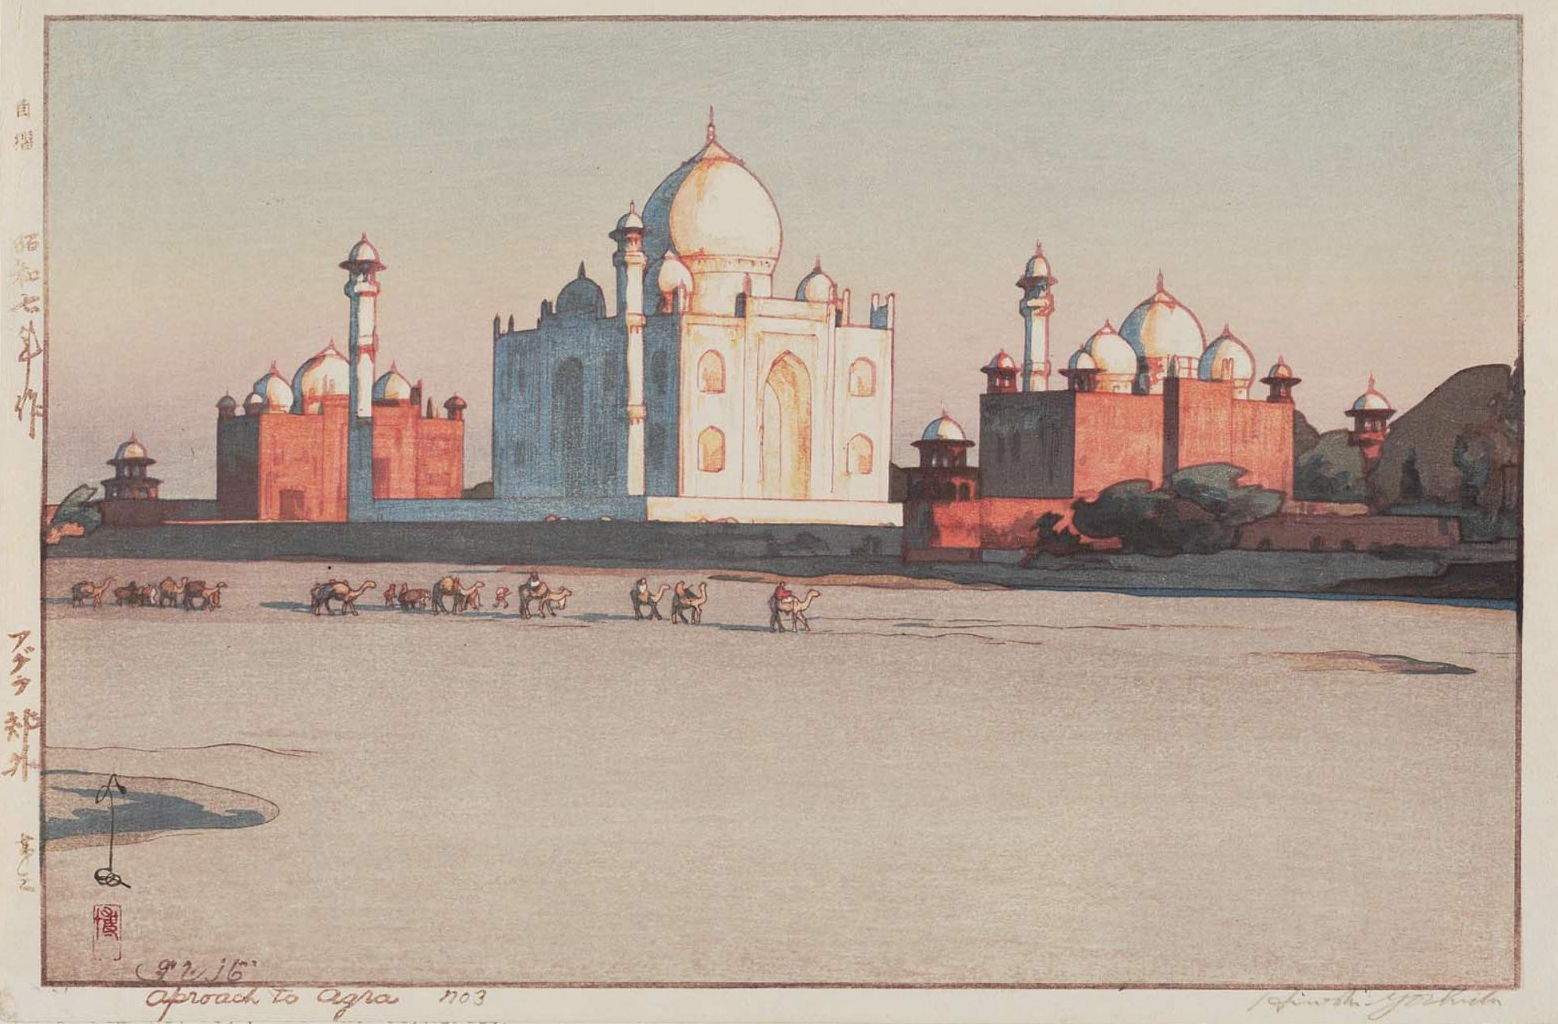 Hiroshi Yoshida “Approach to Agra, No. 3” 1932 woodblock print